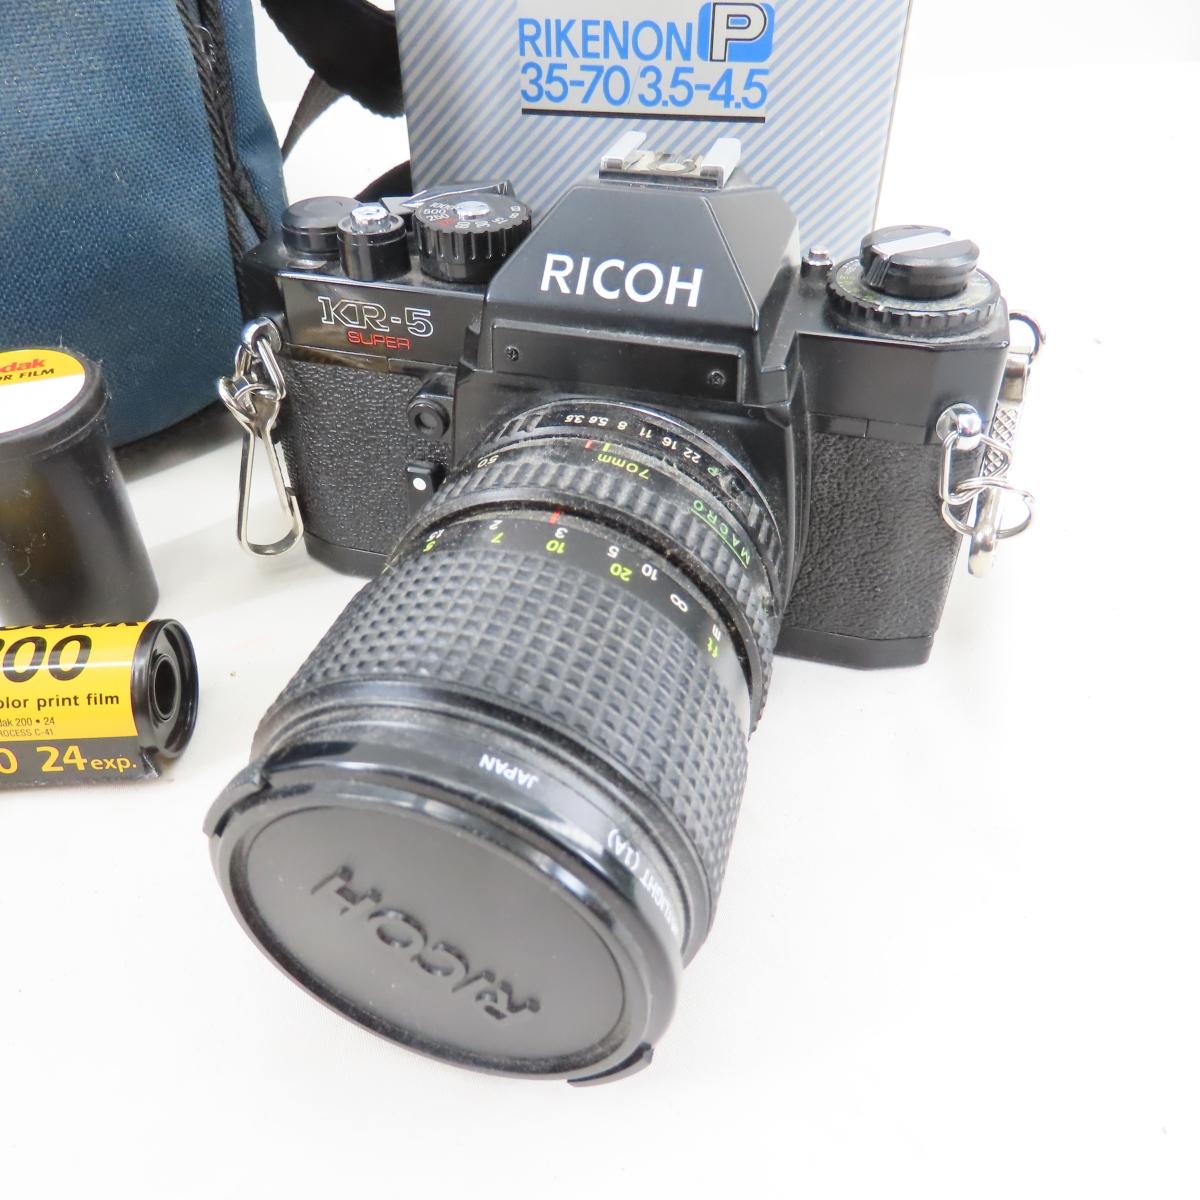 Vintage Ricoh KR-5 Super 35mm Camera & Accessories